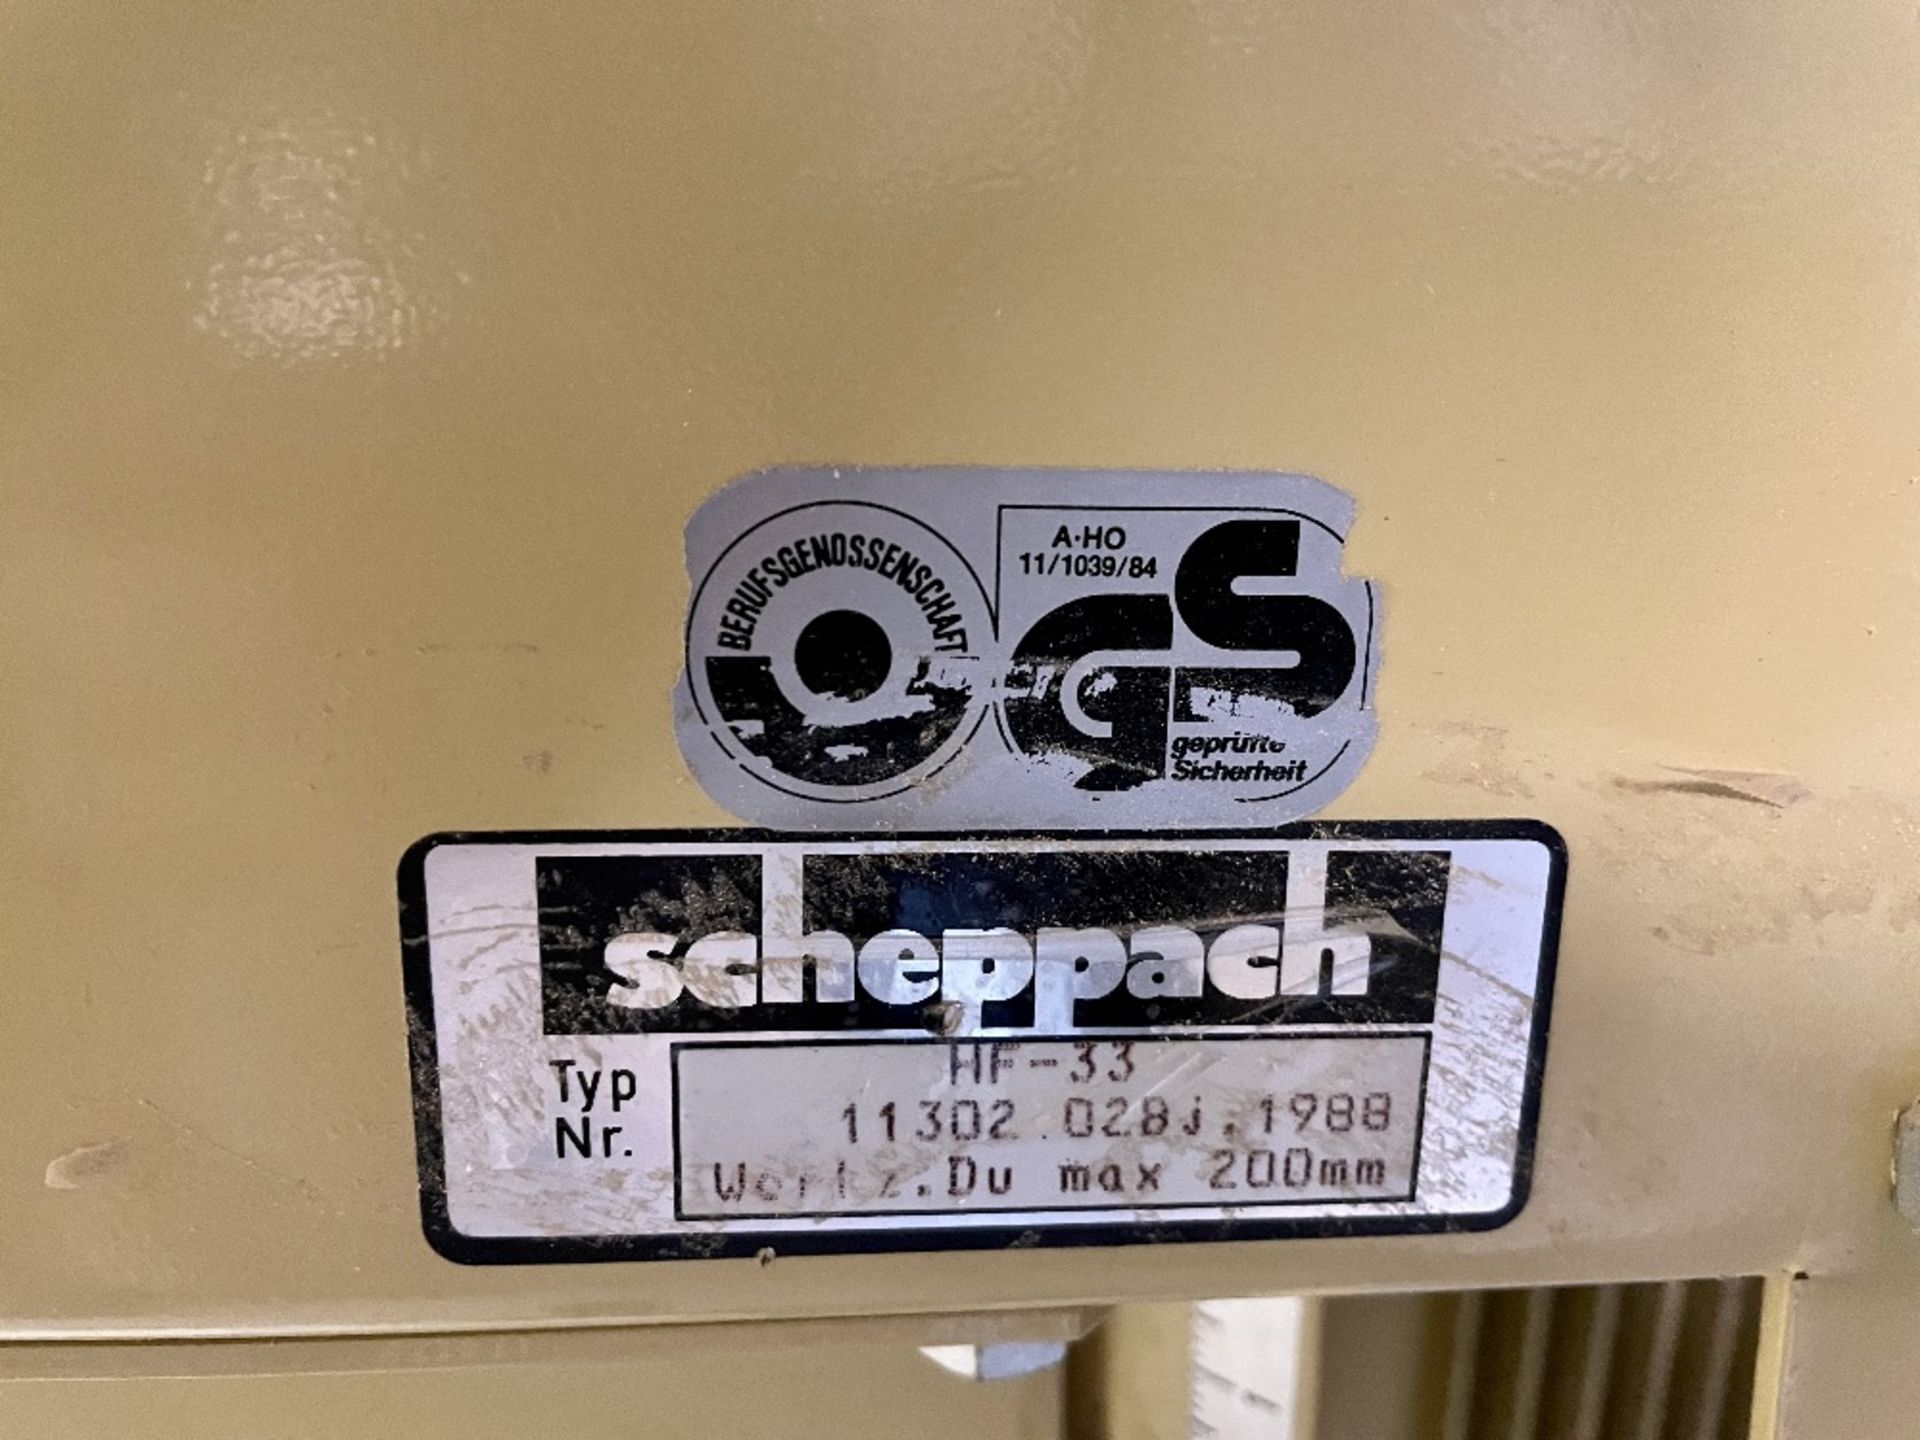 Scheppach HF-33 Spindle Moulder - Image 4 of 7